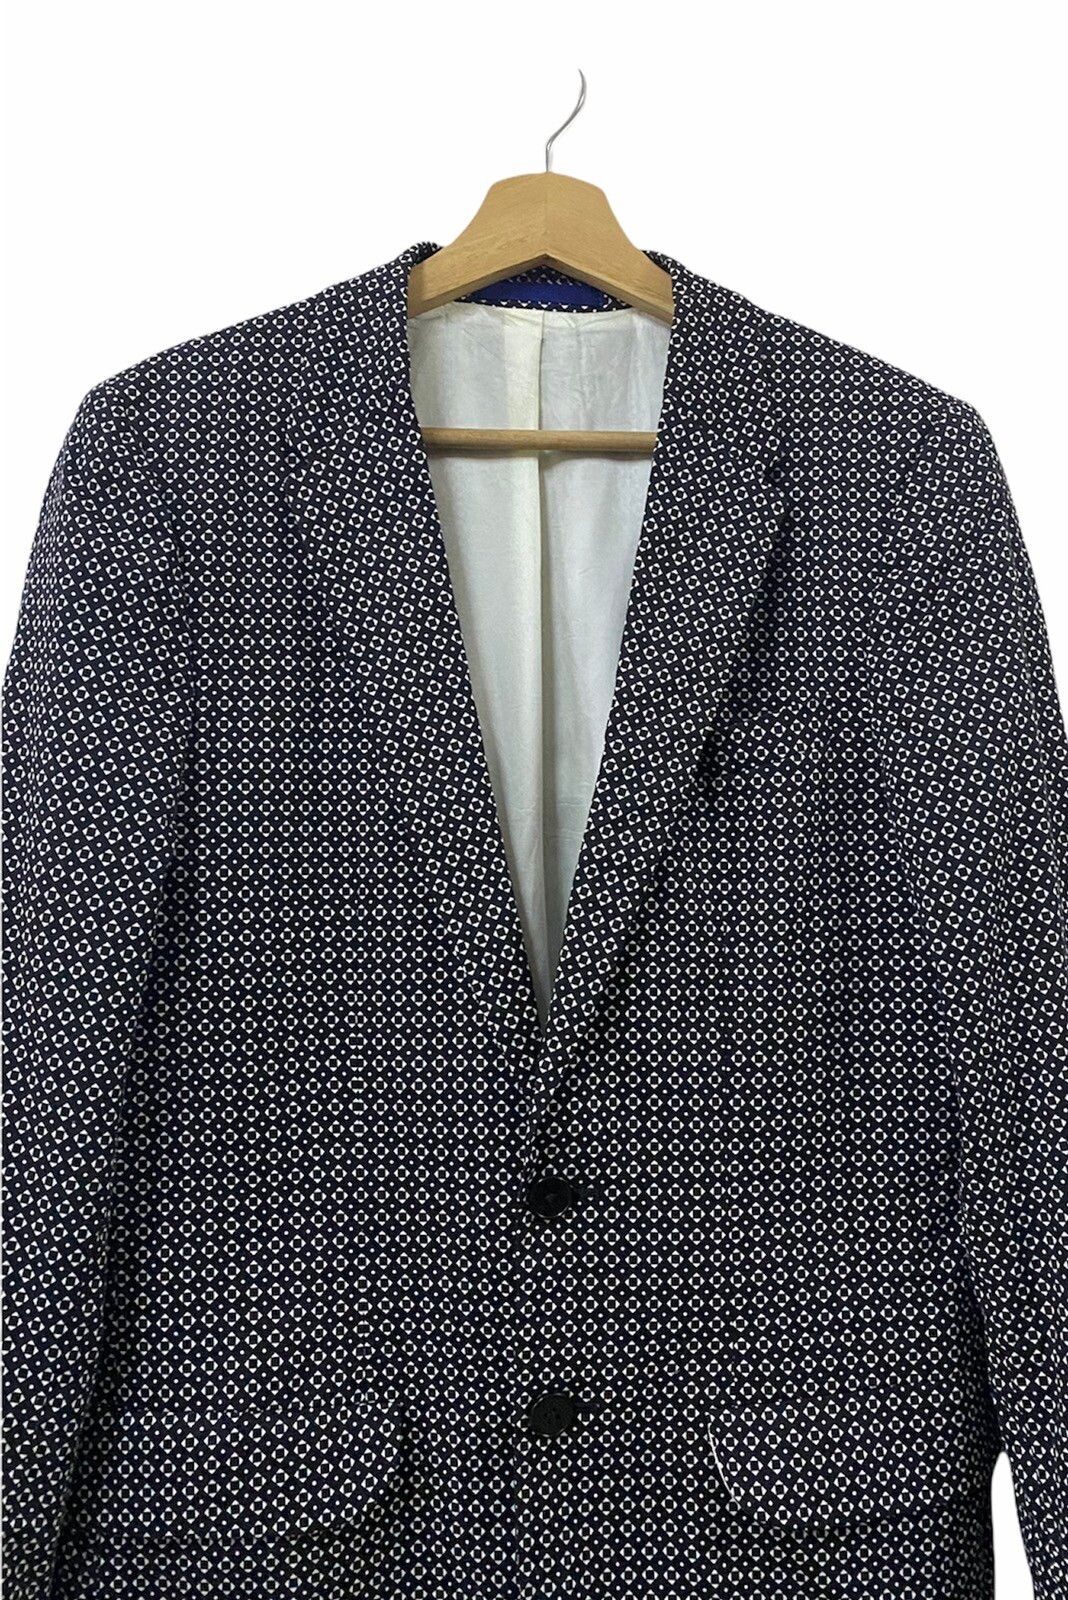 Rare🌑Paul Smith Uk Blazer Style Jacket Geometric Design - 6